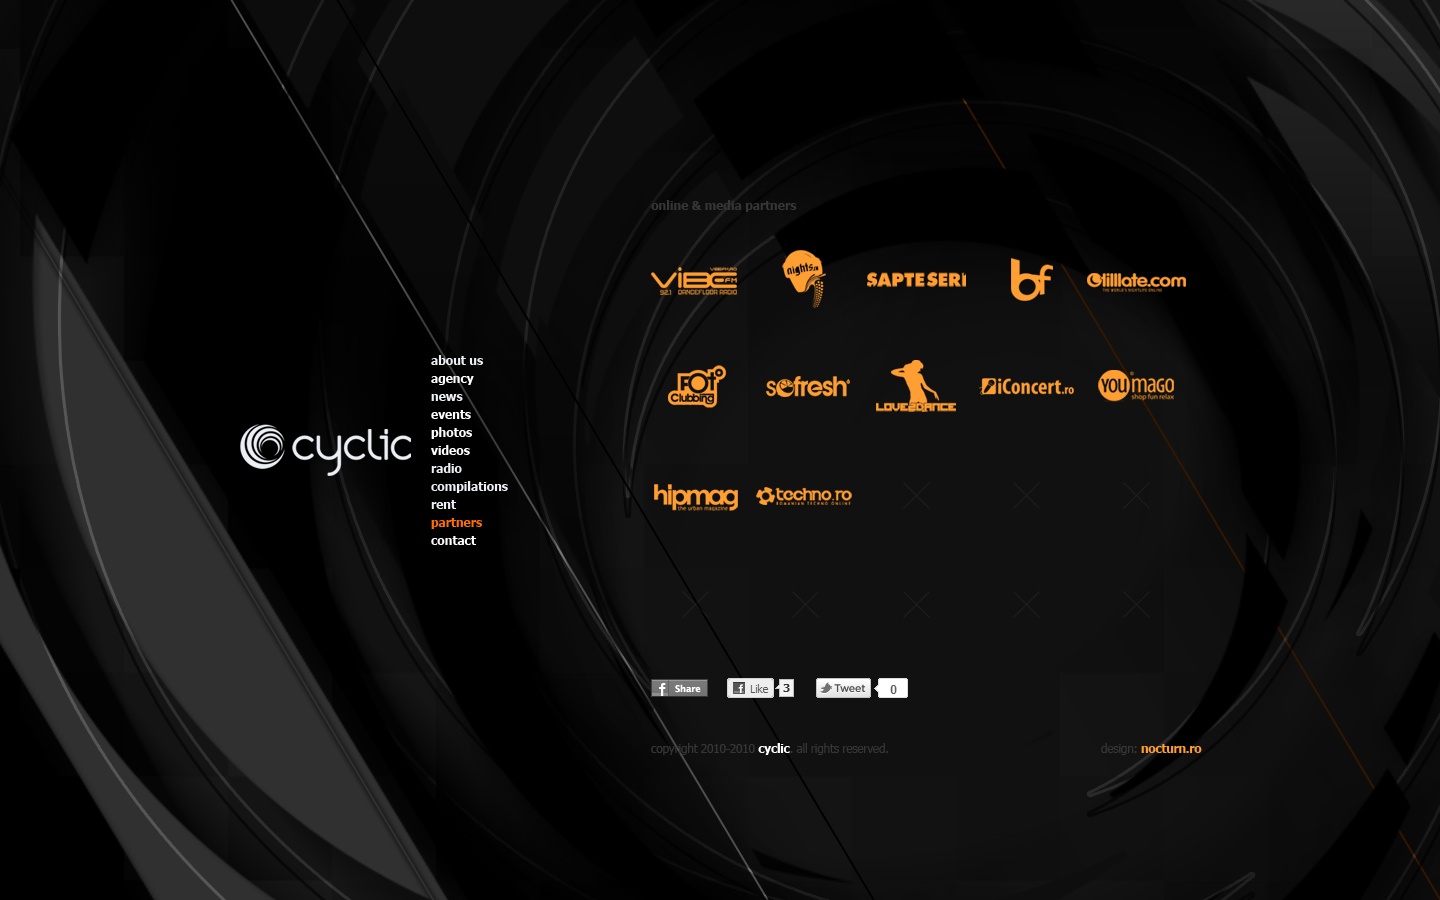 cyclic dj booking agency records label - partners - web website design by Utopia branding agency